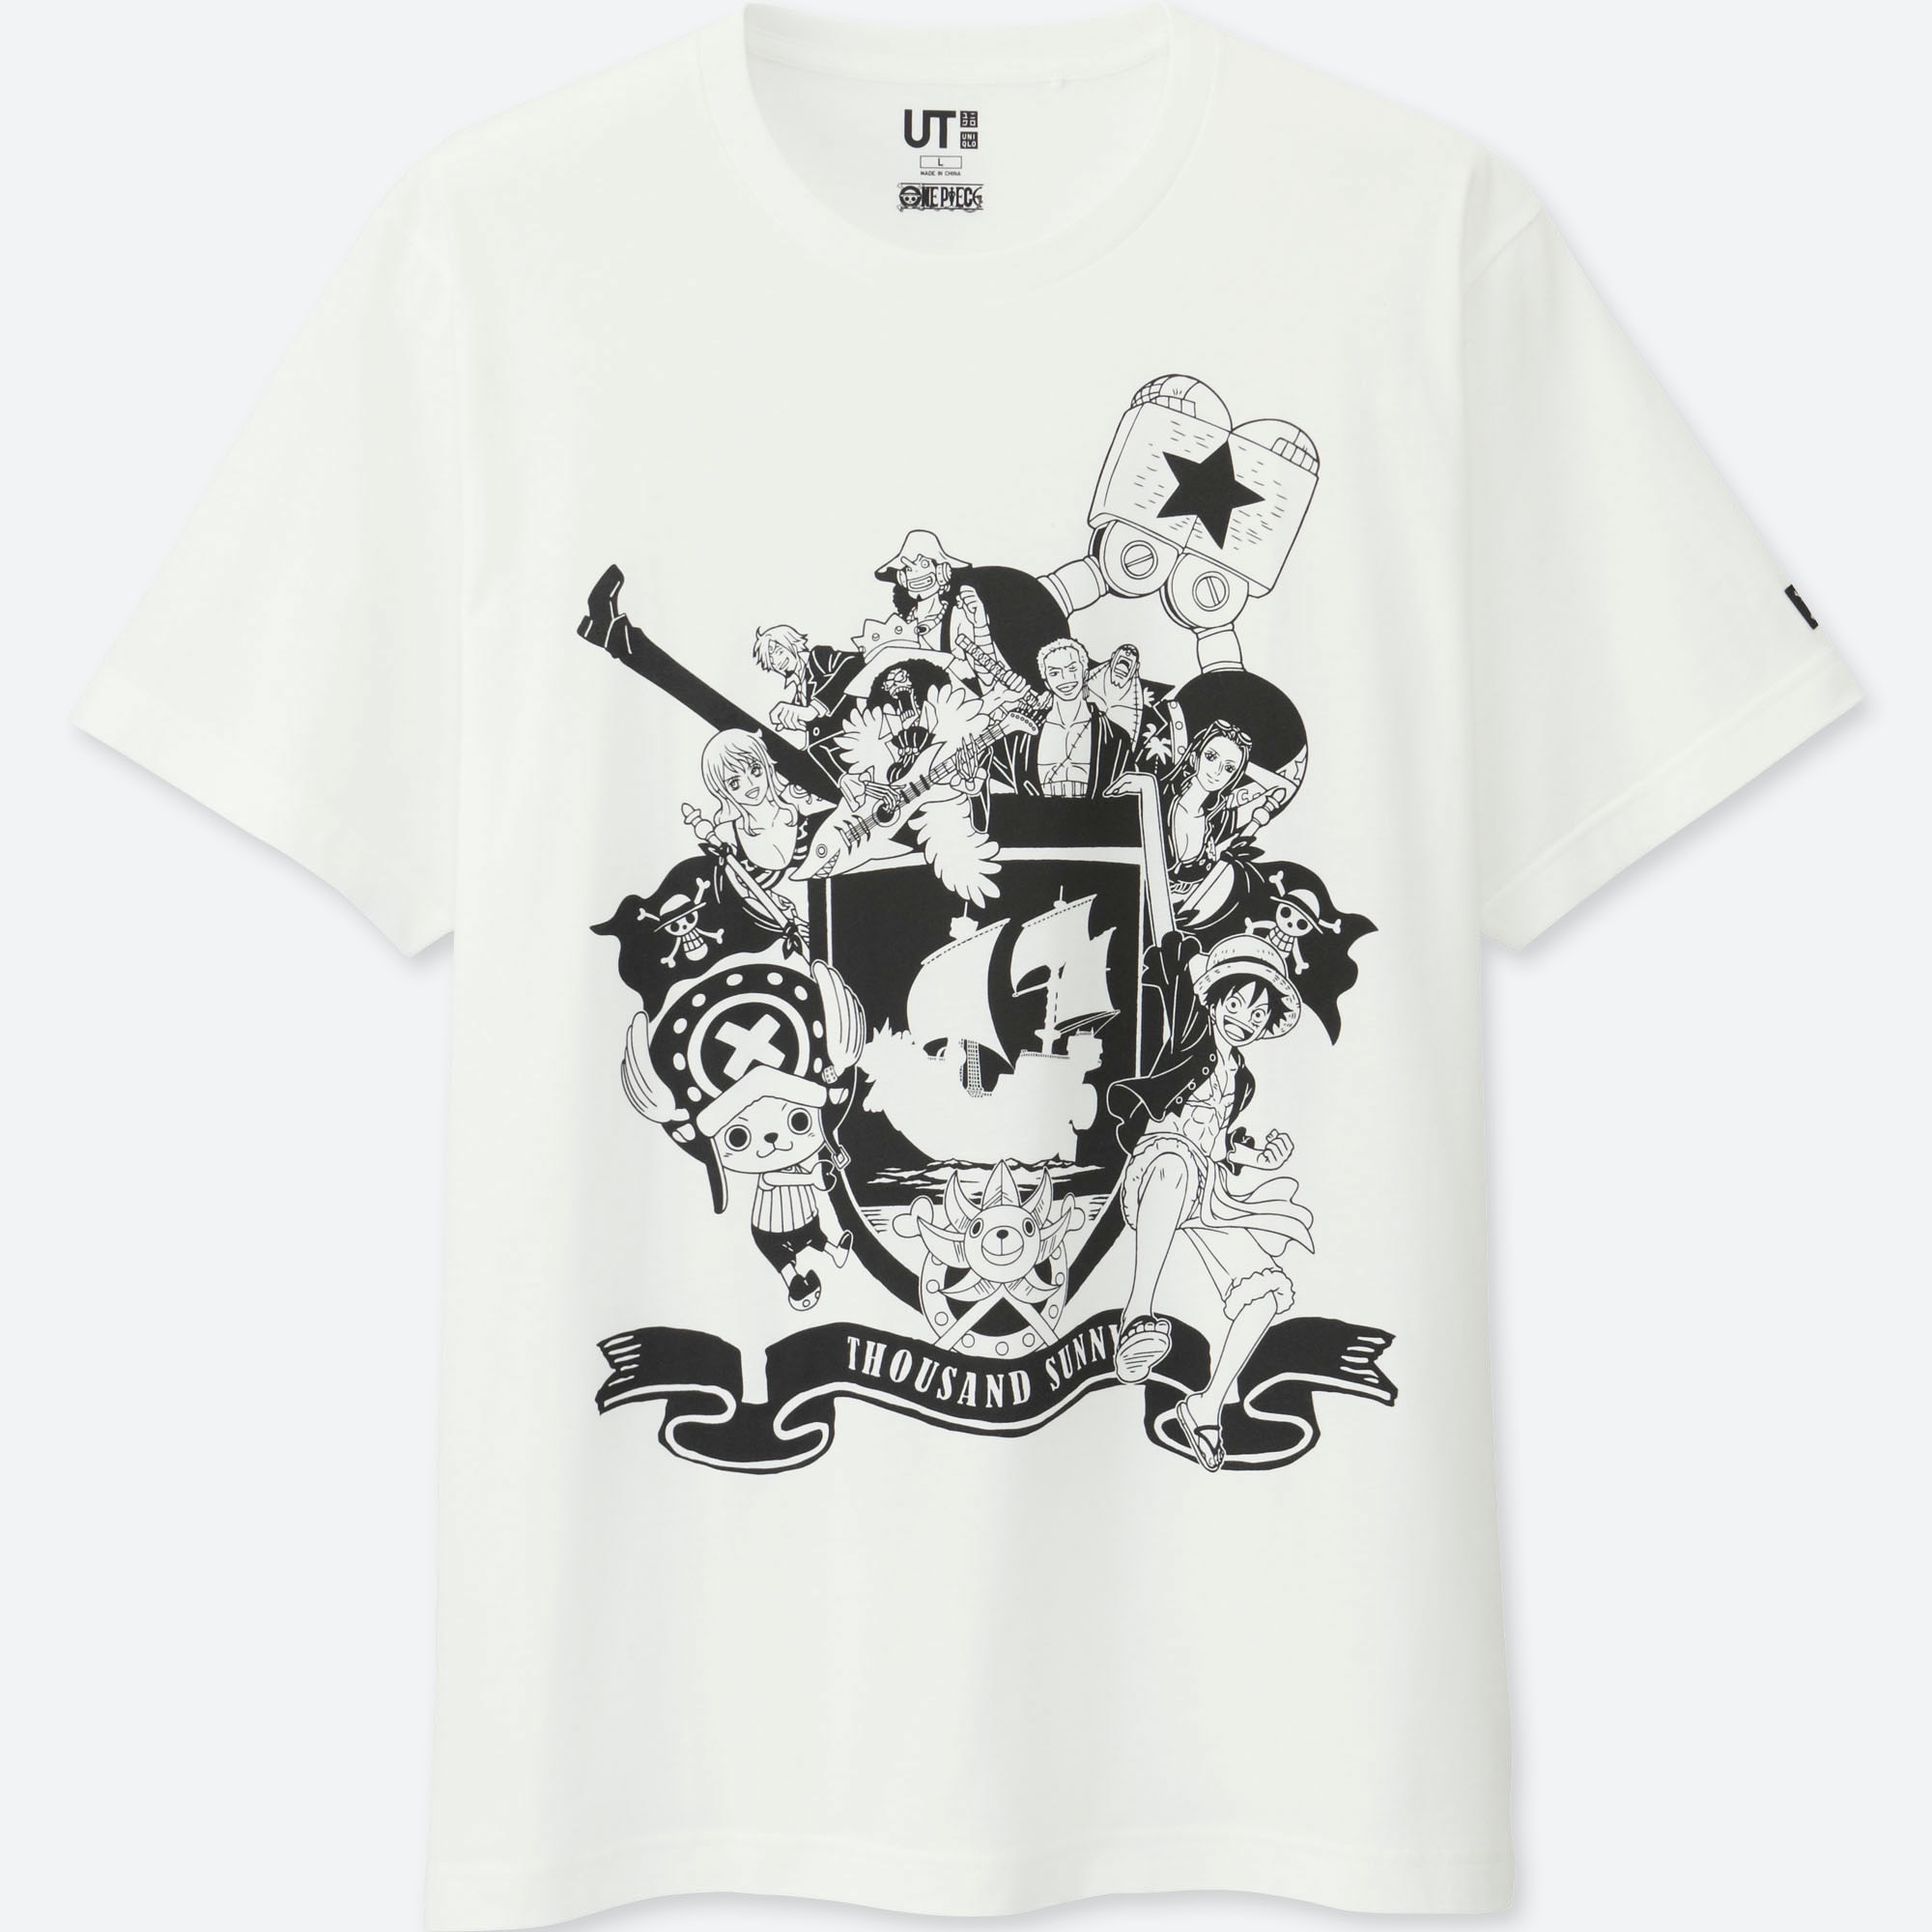 ONE PIECE WANOKUNI UT UNIQLO Graphic Tshirt Luffy Samurai size M  eBay